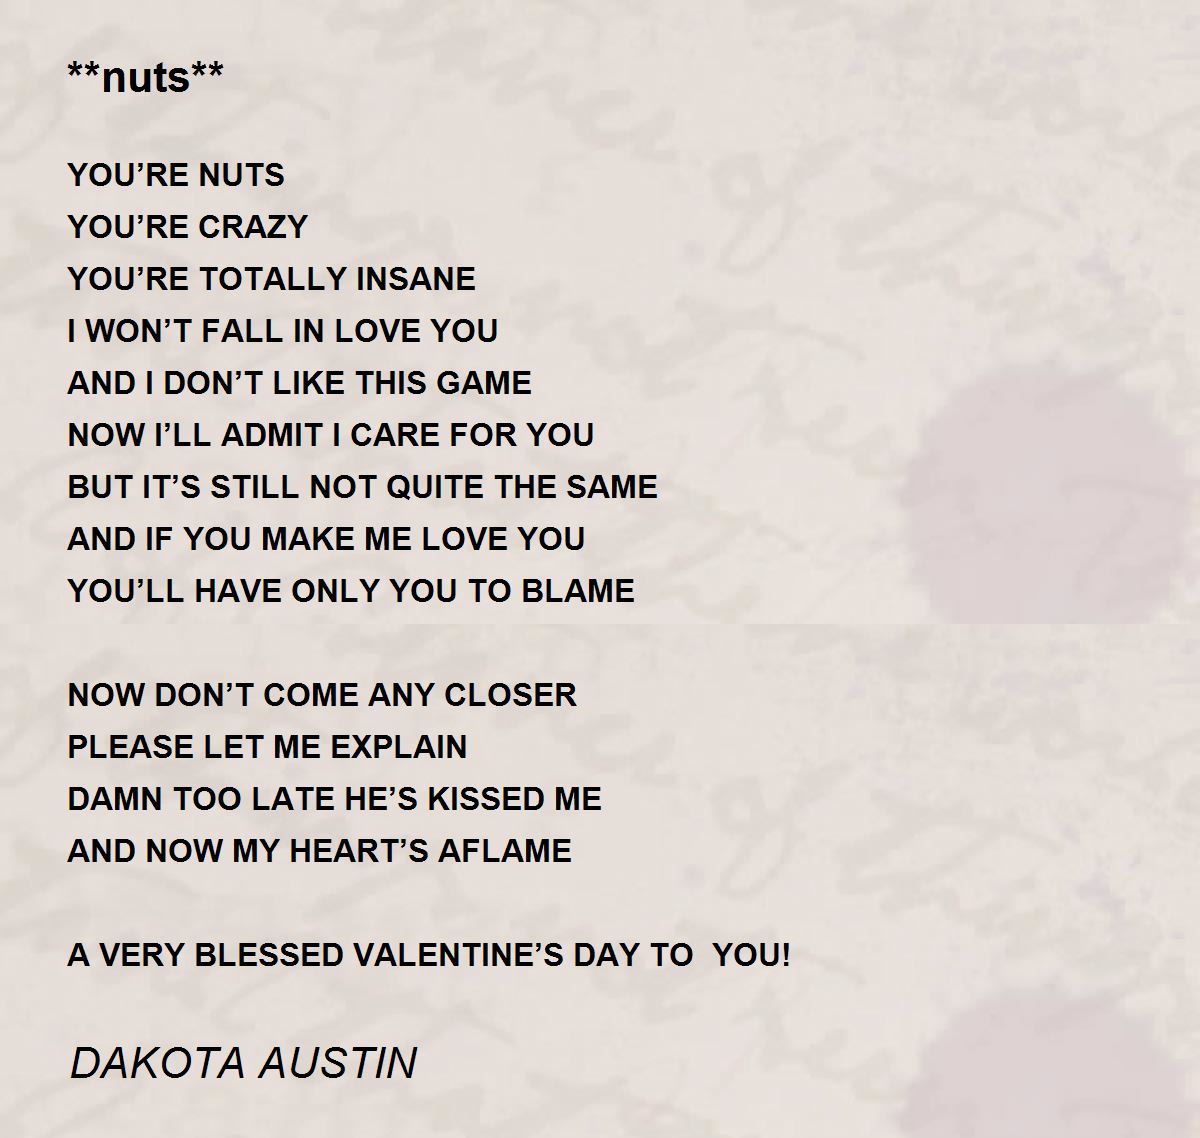 nuts** - **nuts** Poem by DAKOTA AUSTIN